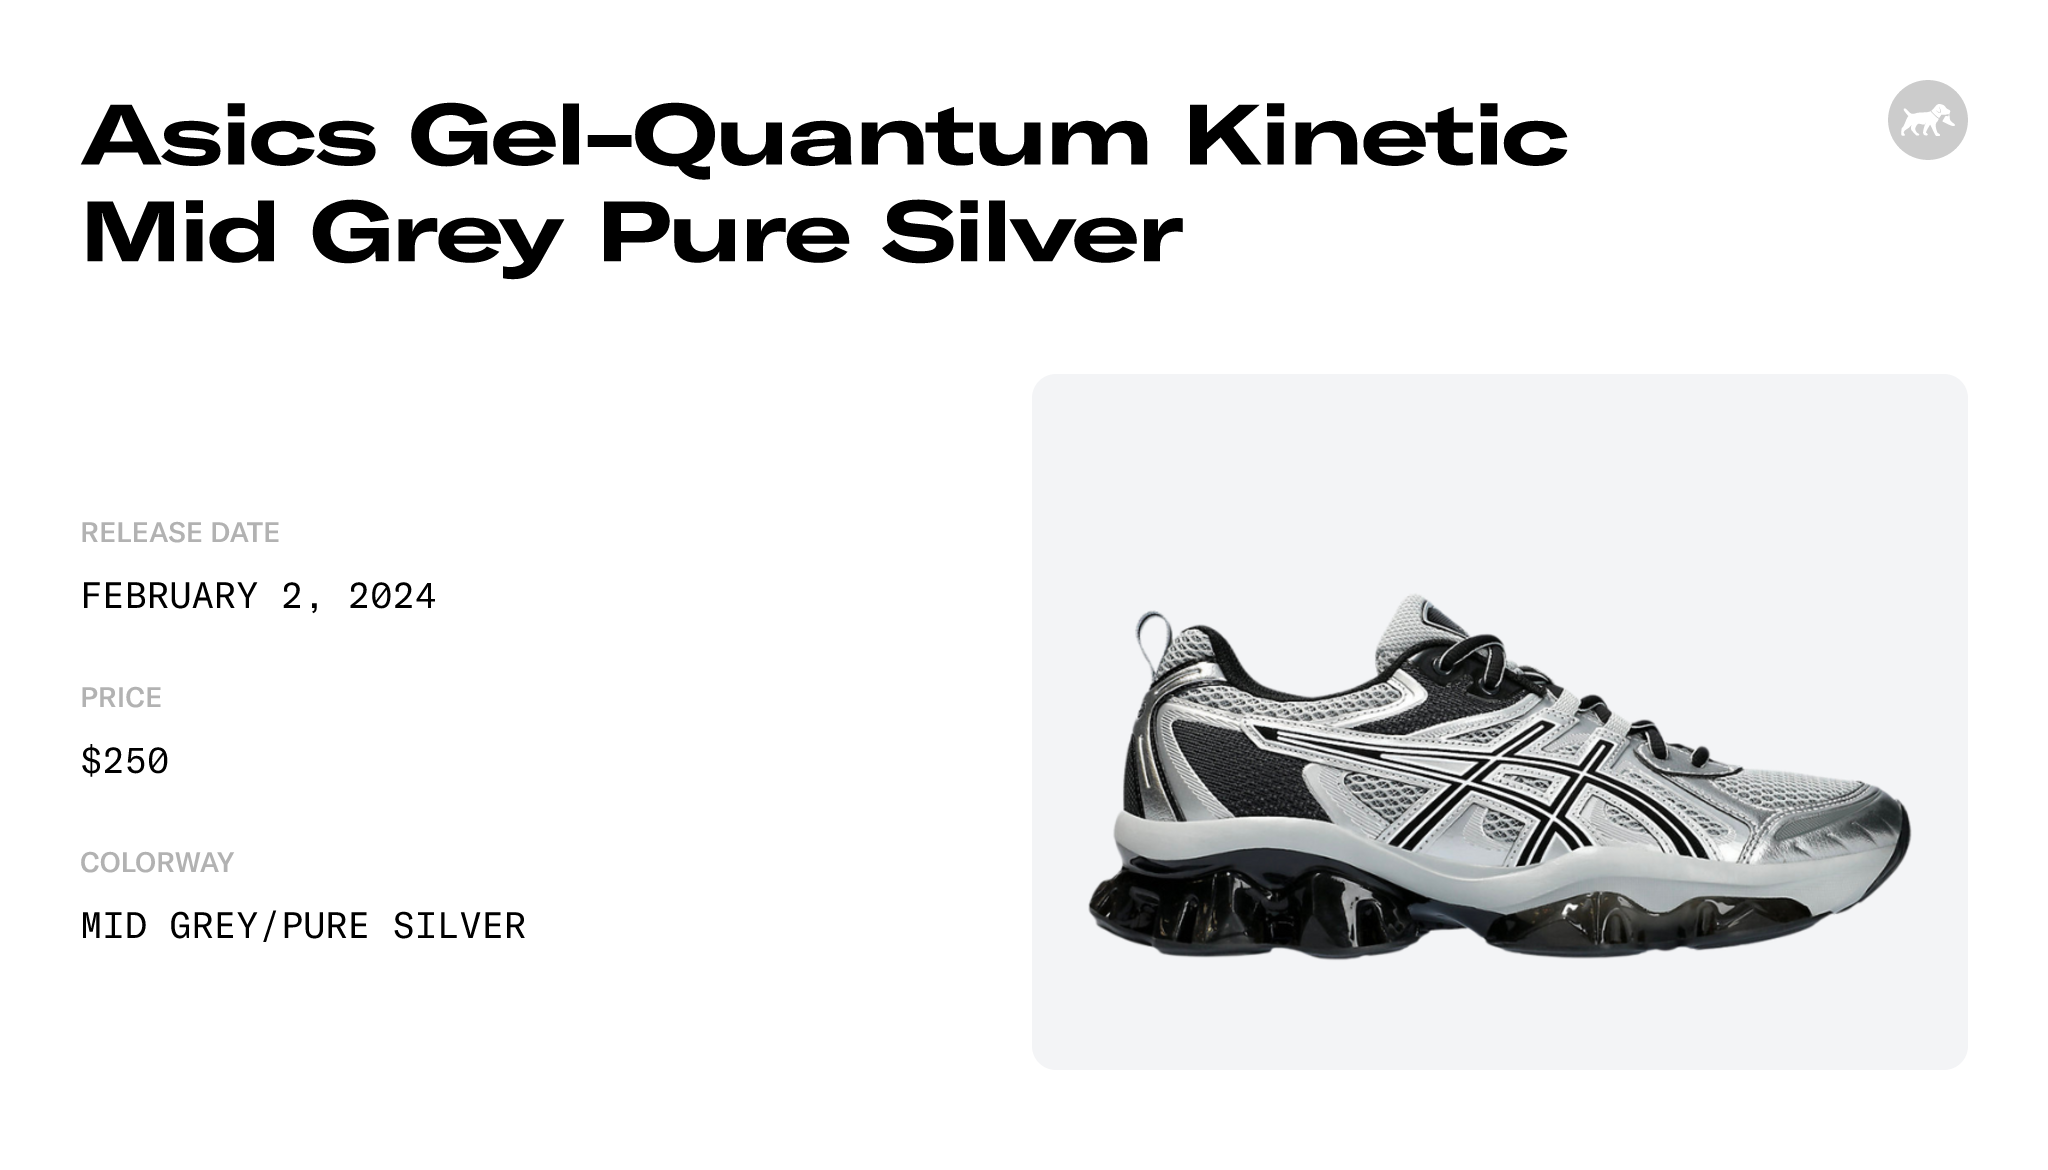 Asics Gel-Quantum Kinetic Mid Grey Pure Silver - 1203A270-022 